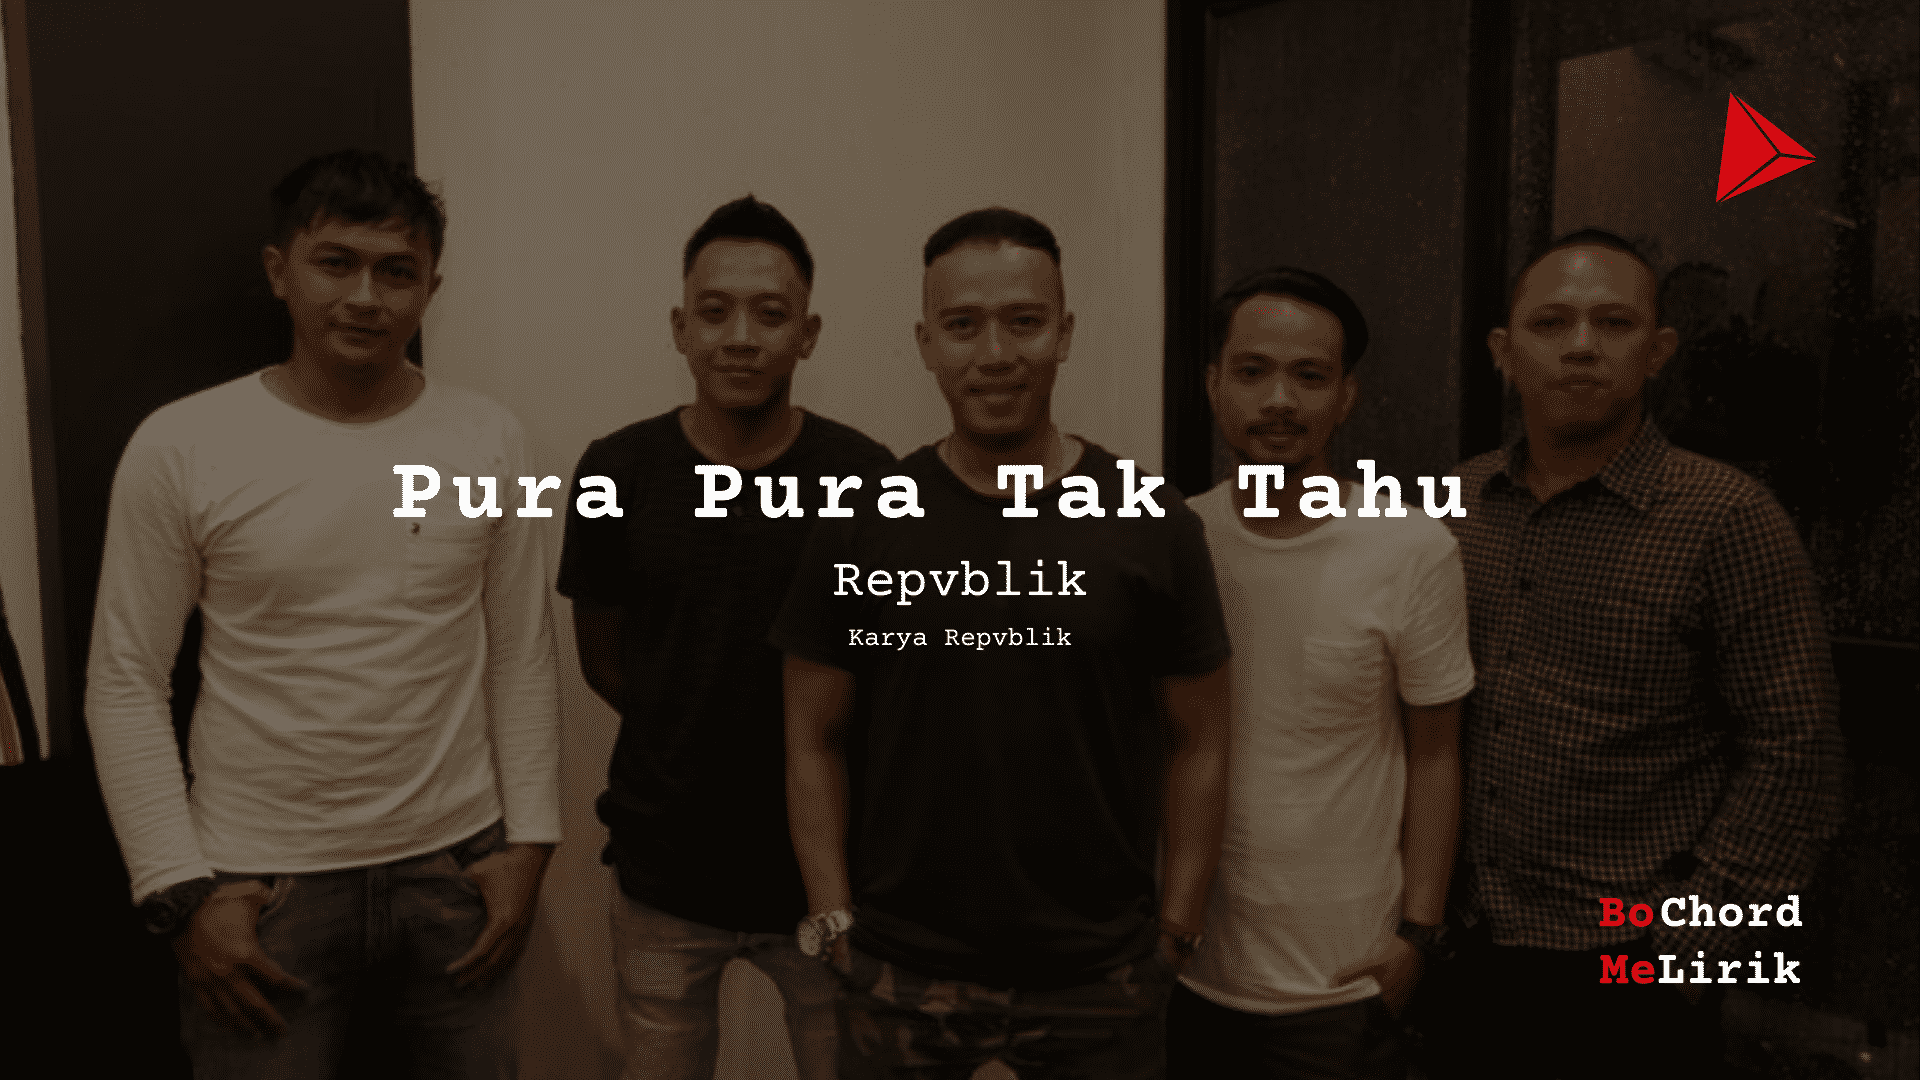 Apa Genre Lagu Pura-Pura Tak Tahu?